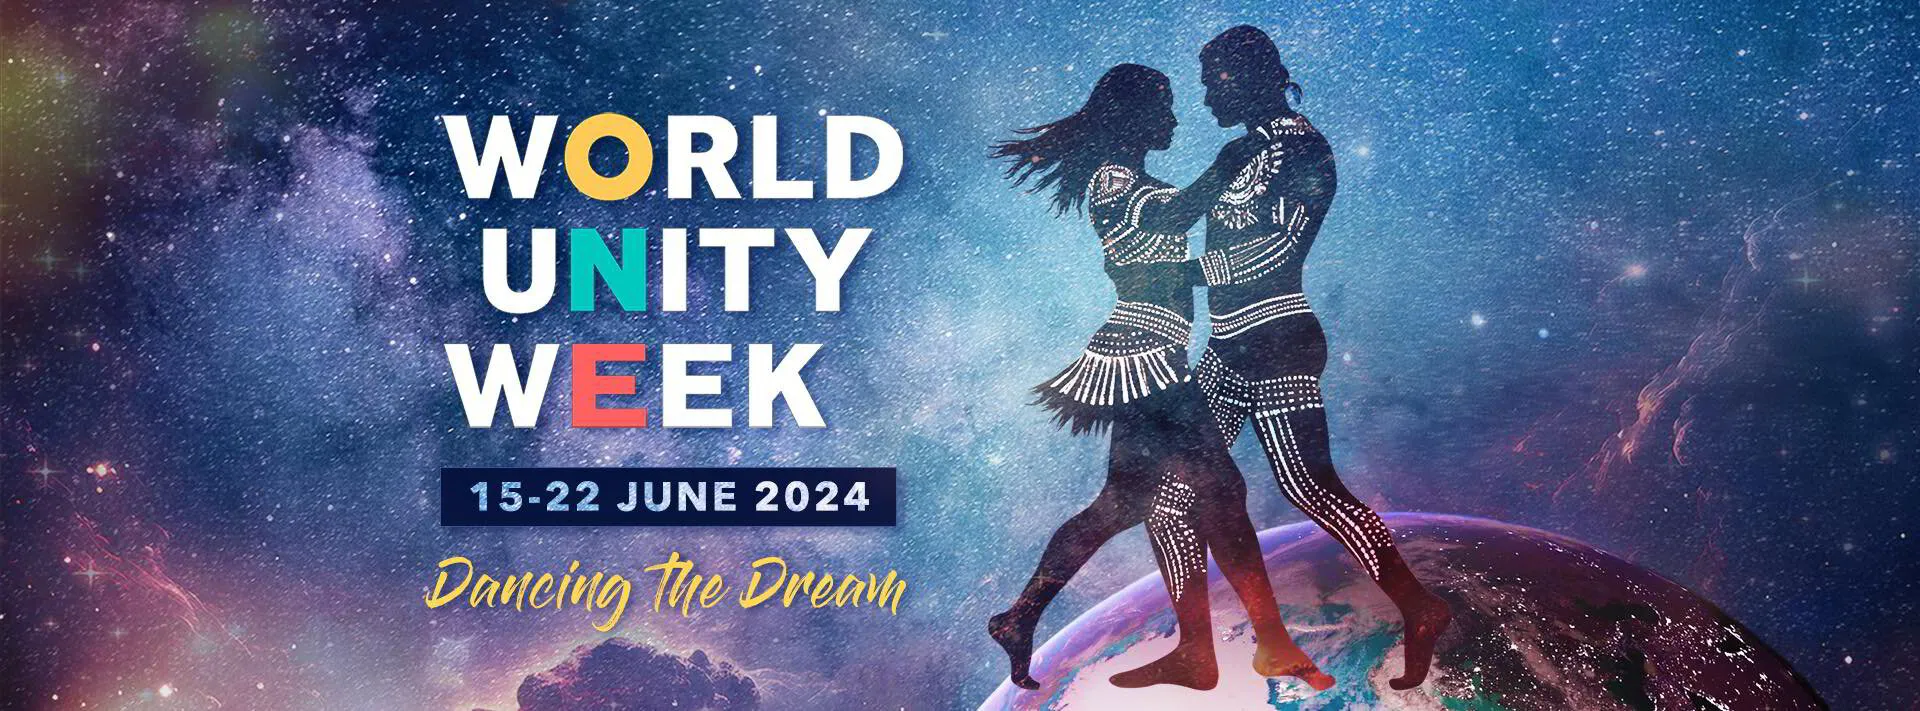 World Unity Week